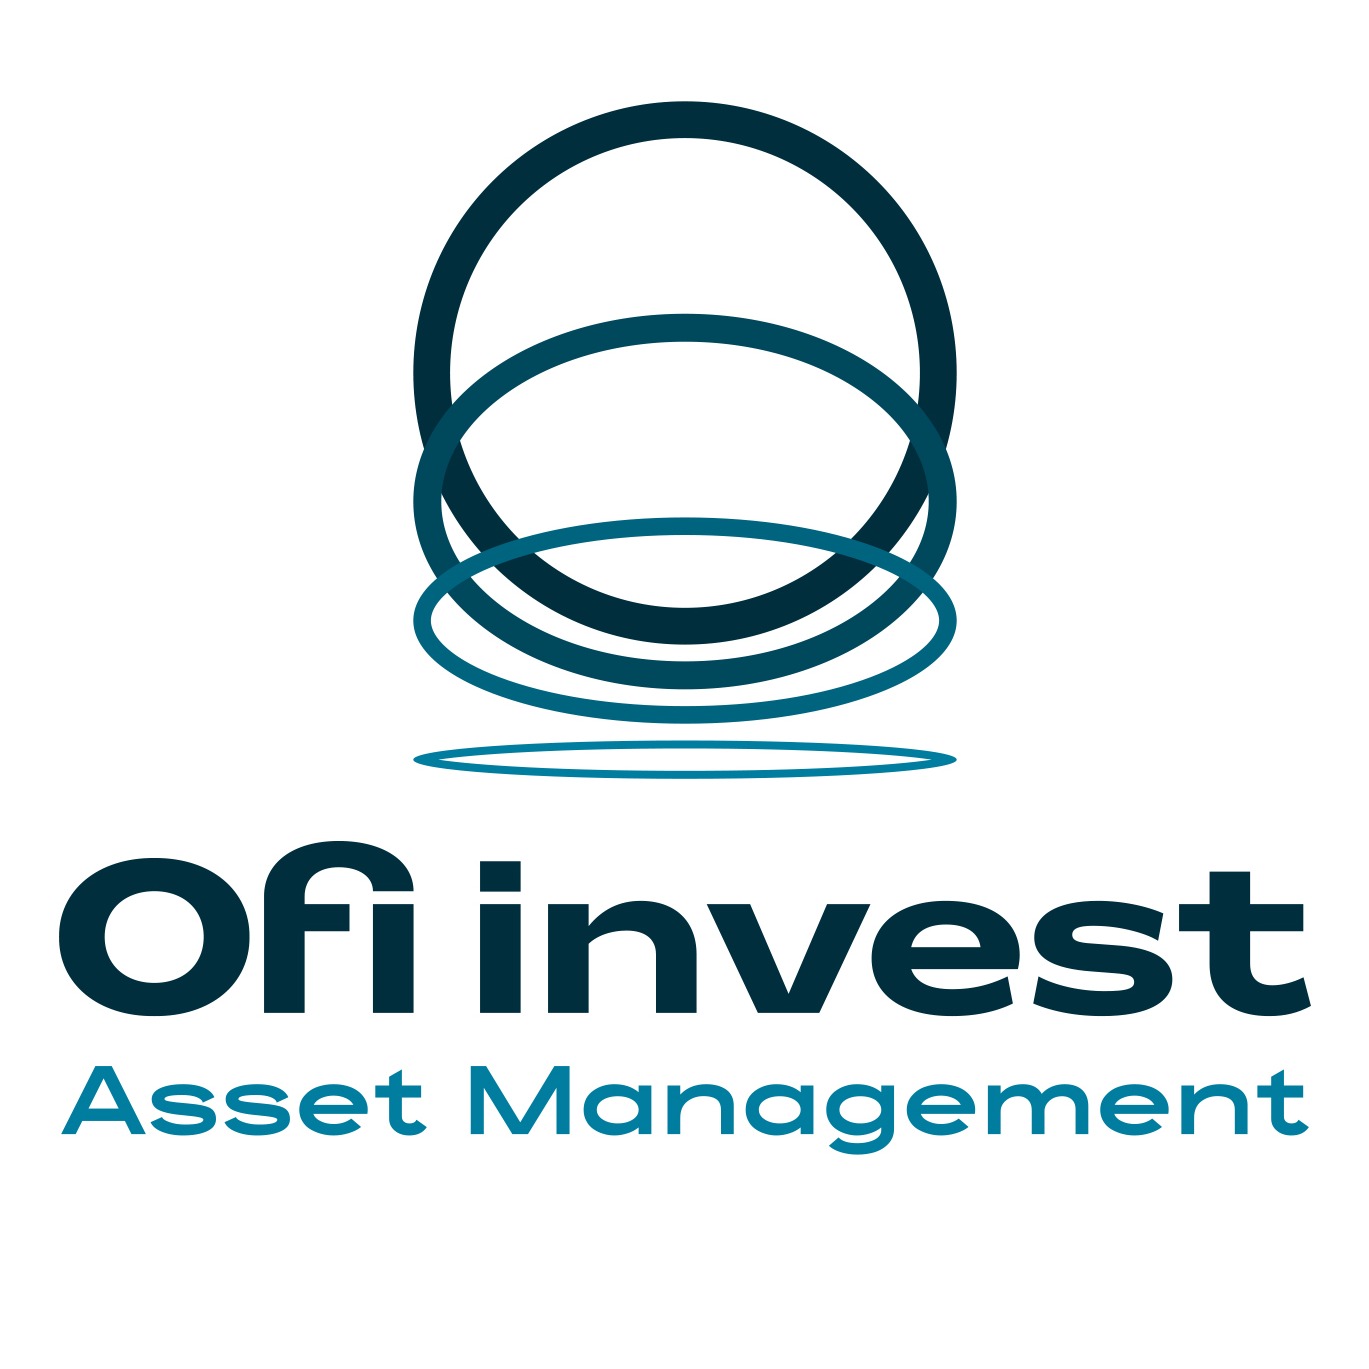 OFI Invest Asset Management